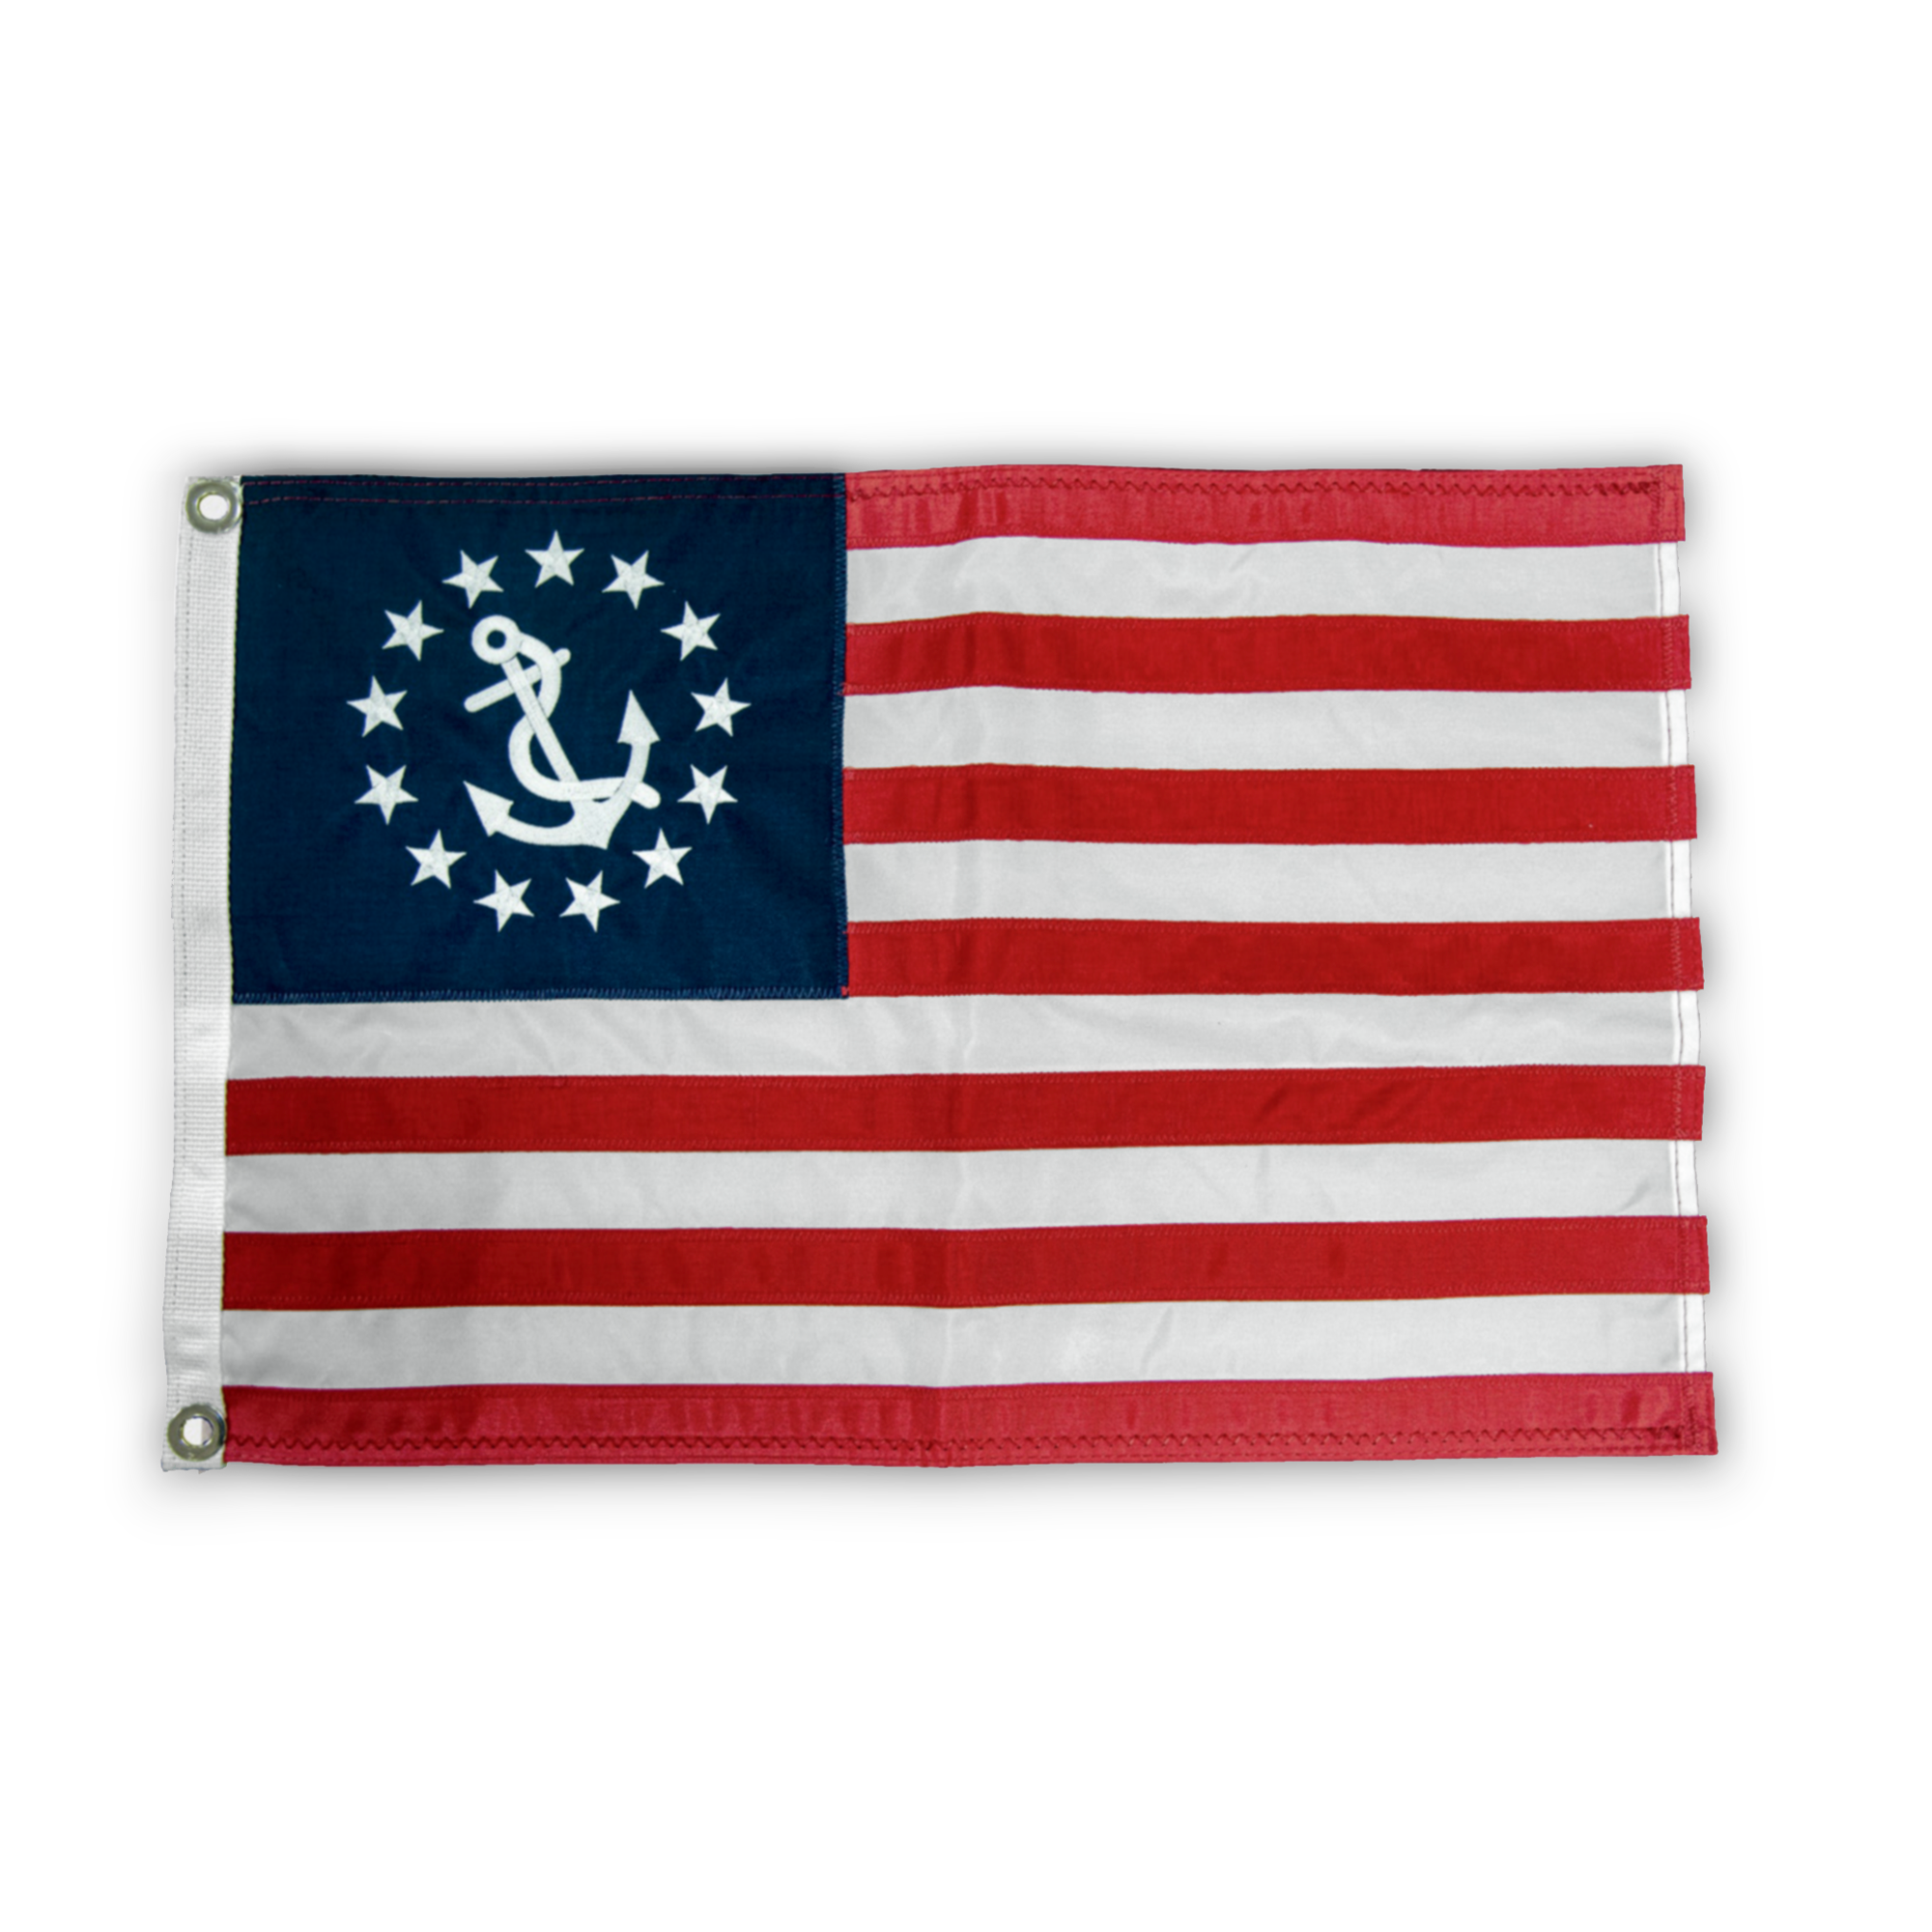 16"x 24" Chris-Craft USA Yacht Ensign Flag